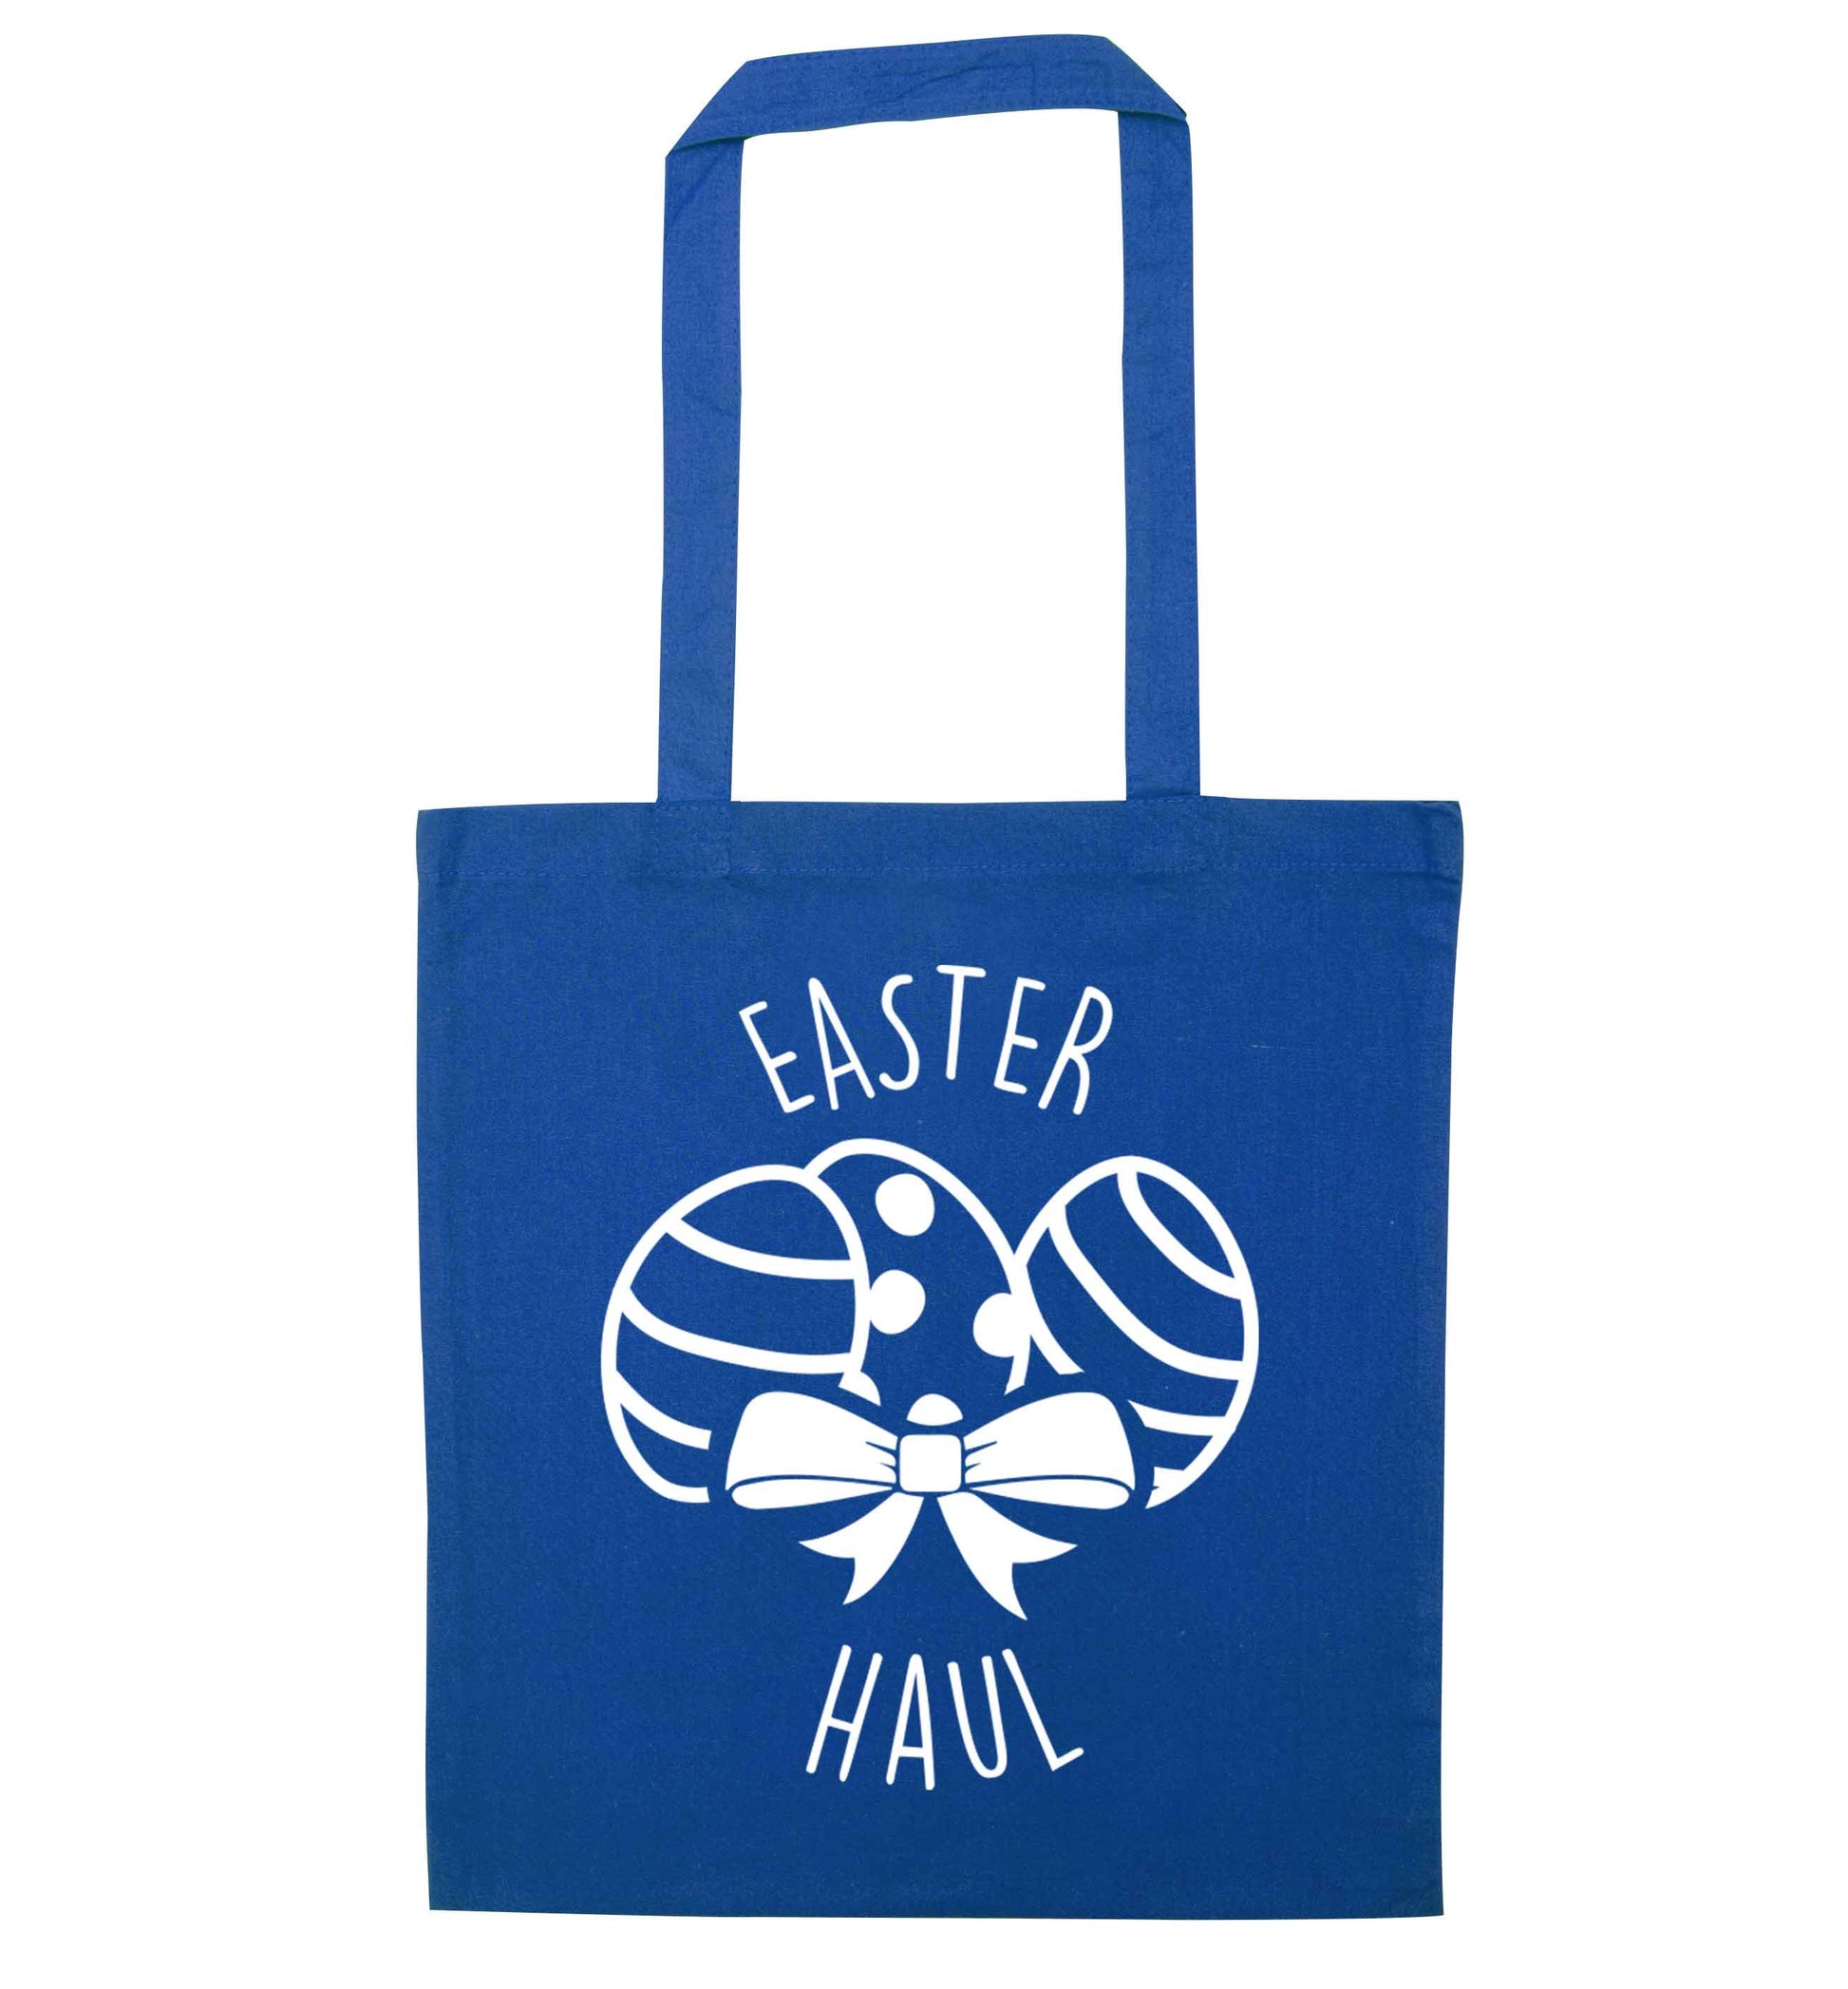 Easter haul blue tote bag